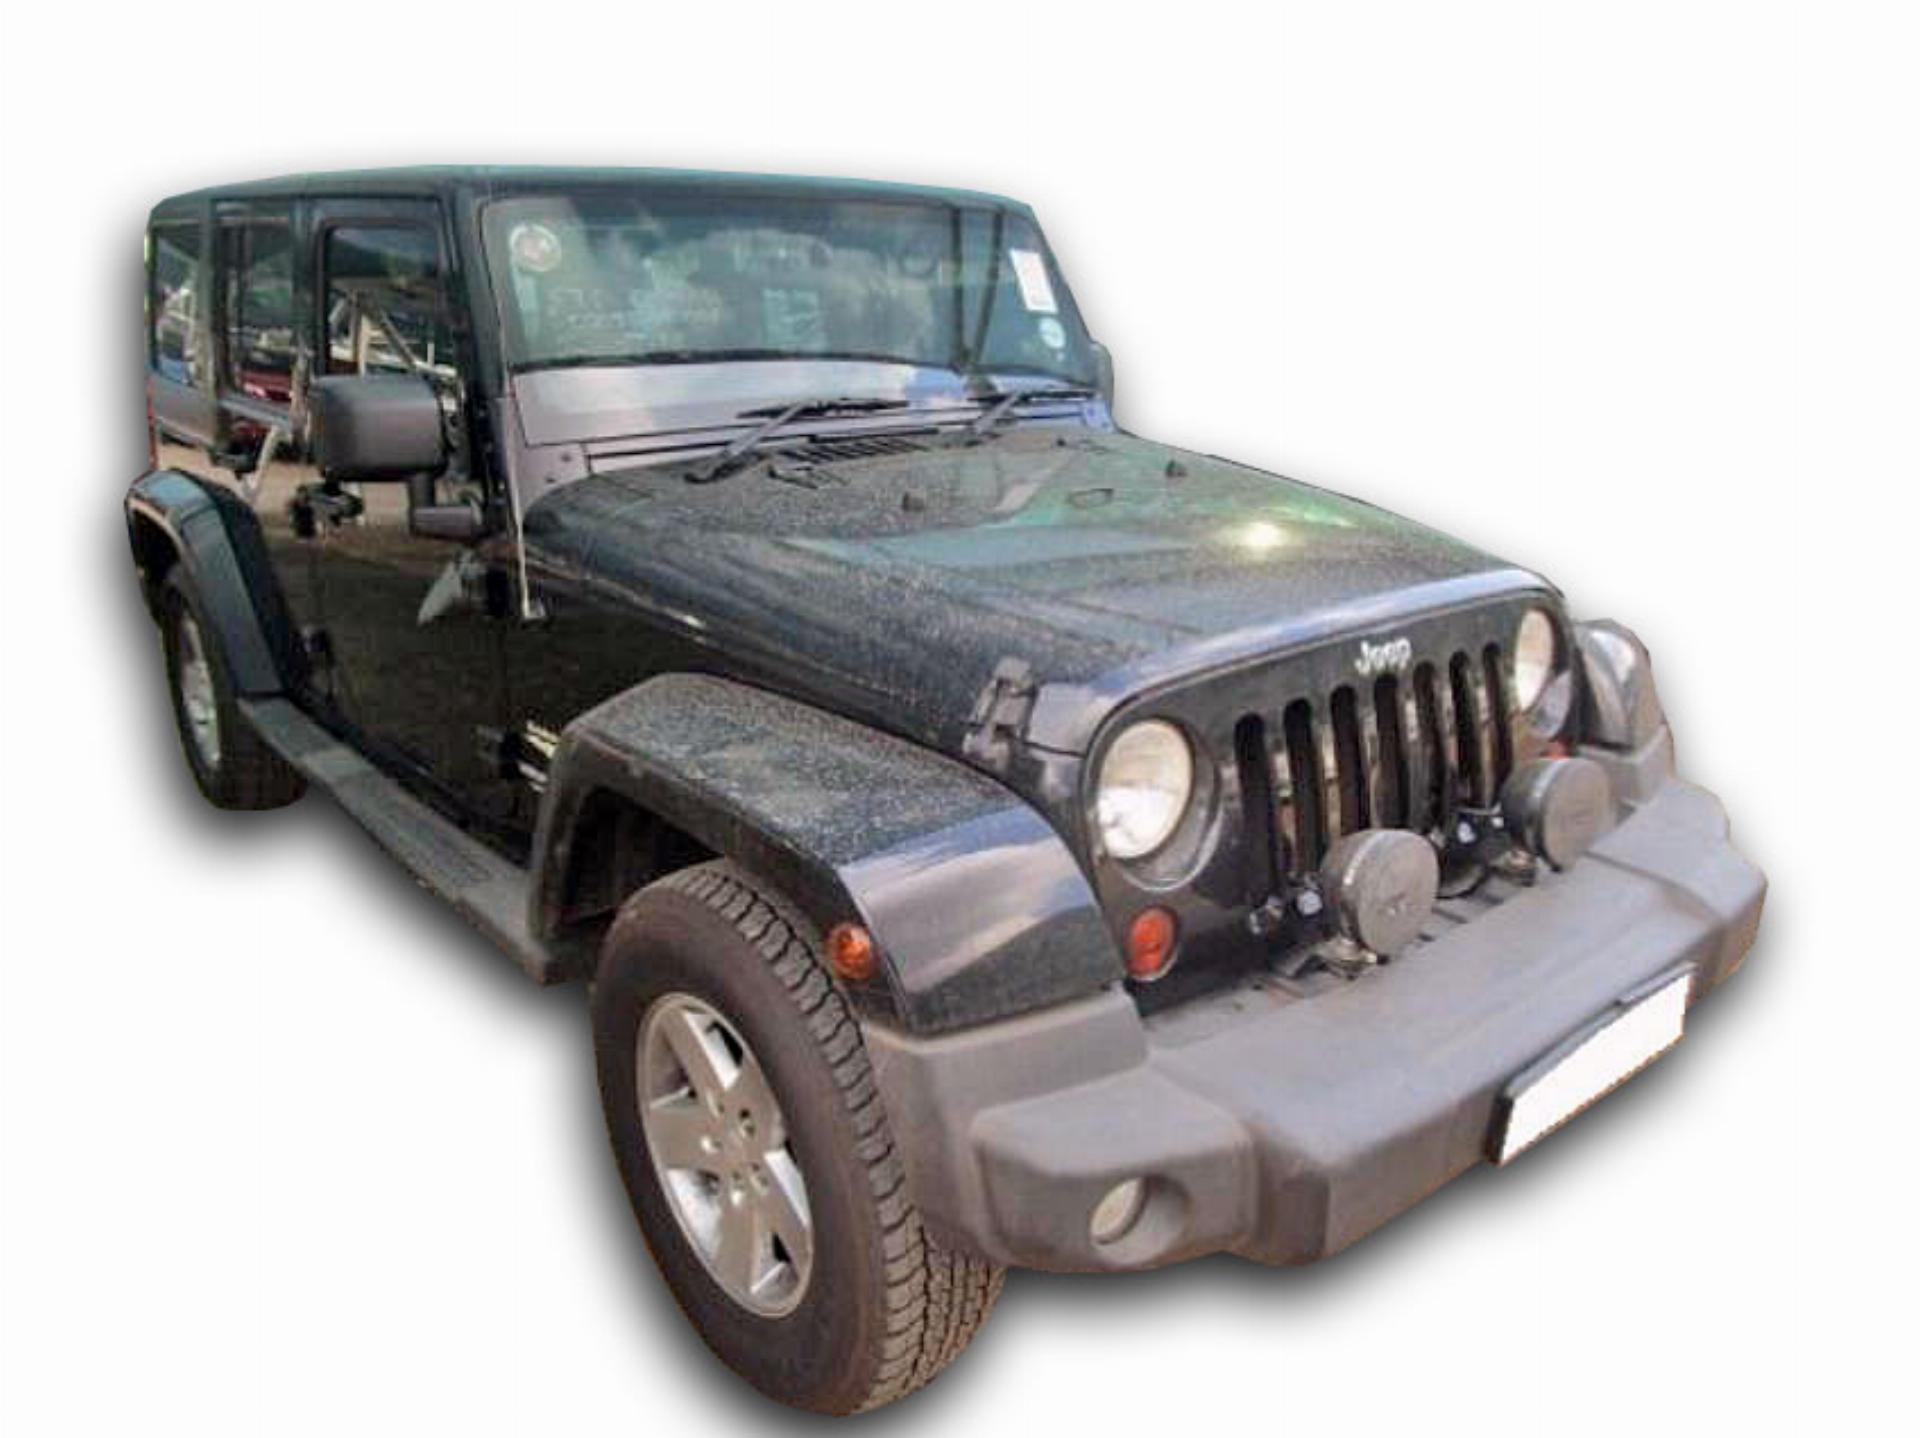 Repossessed Jeep Wrangler Unltd 2011 on auction - MC48382